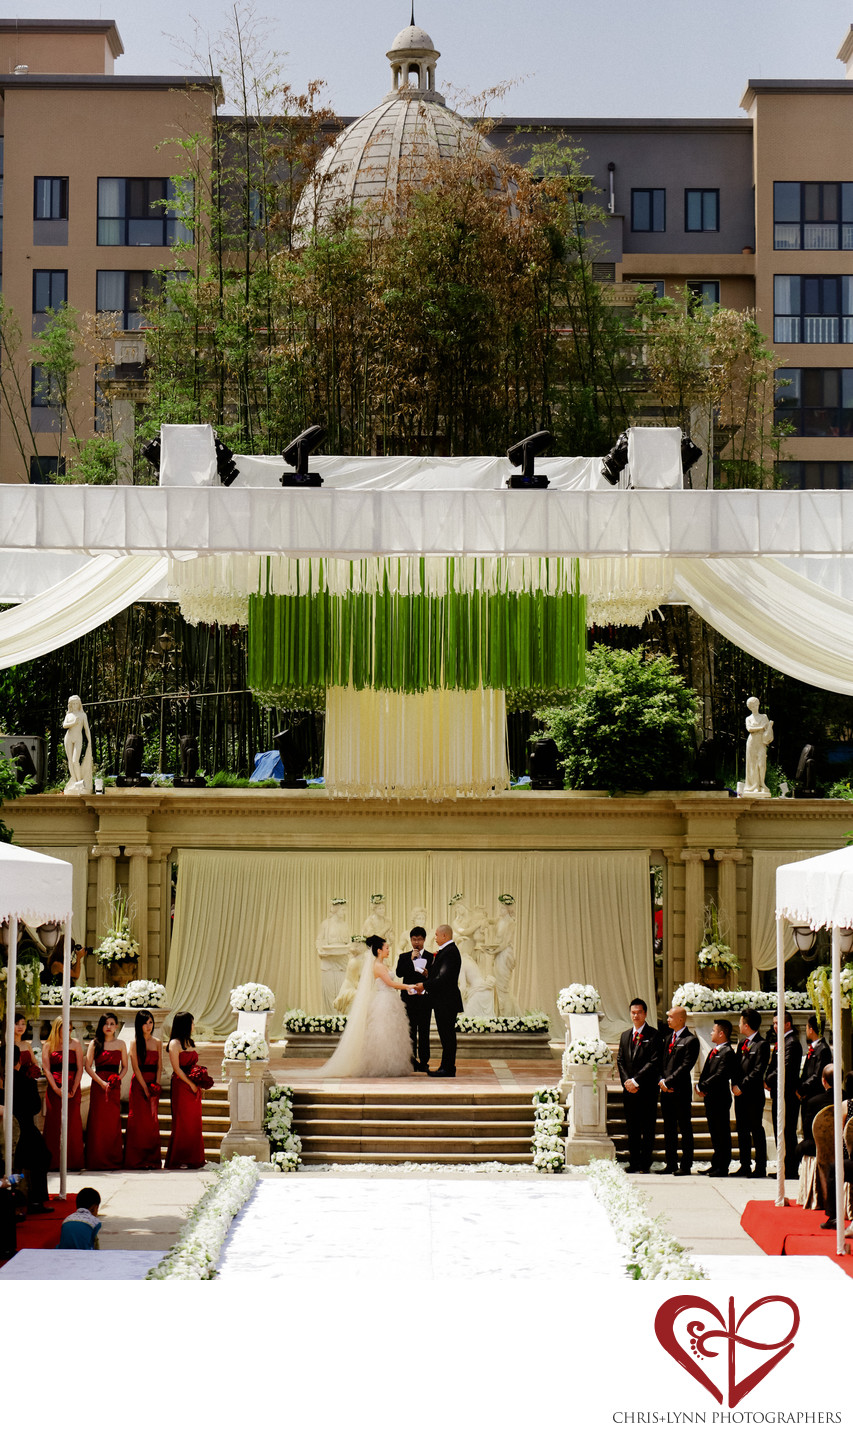 China Destination Wedding, Ceremony Pictures